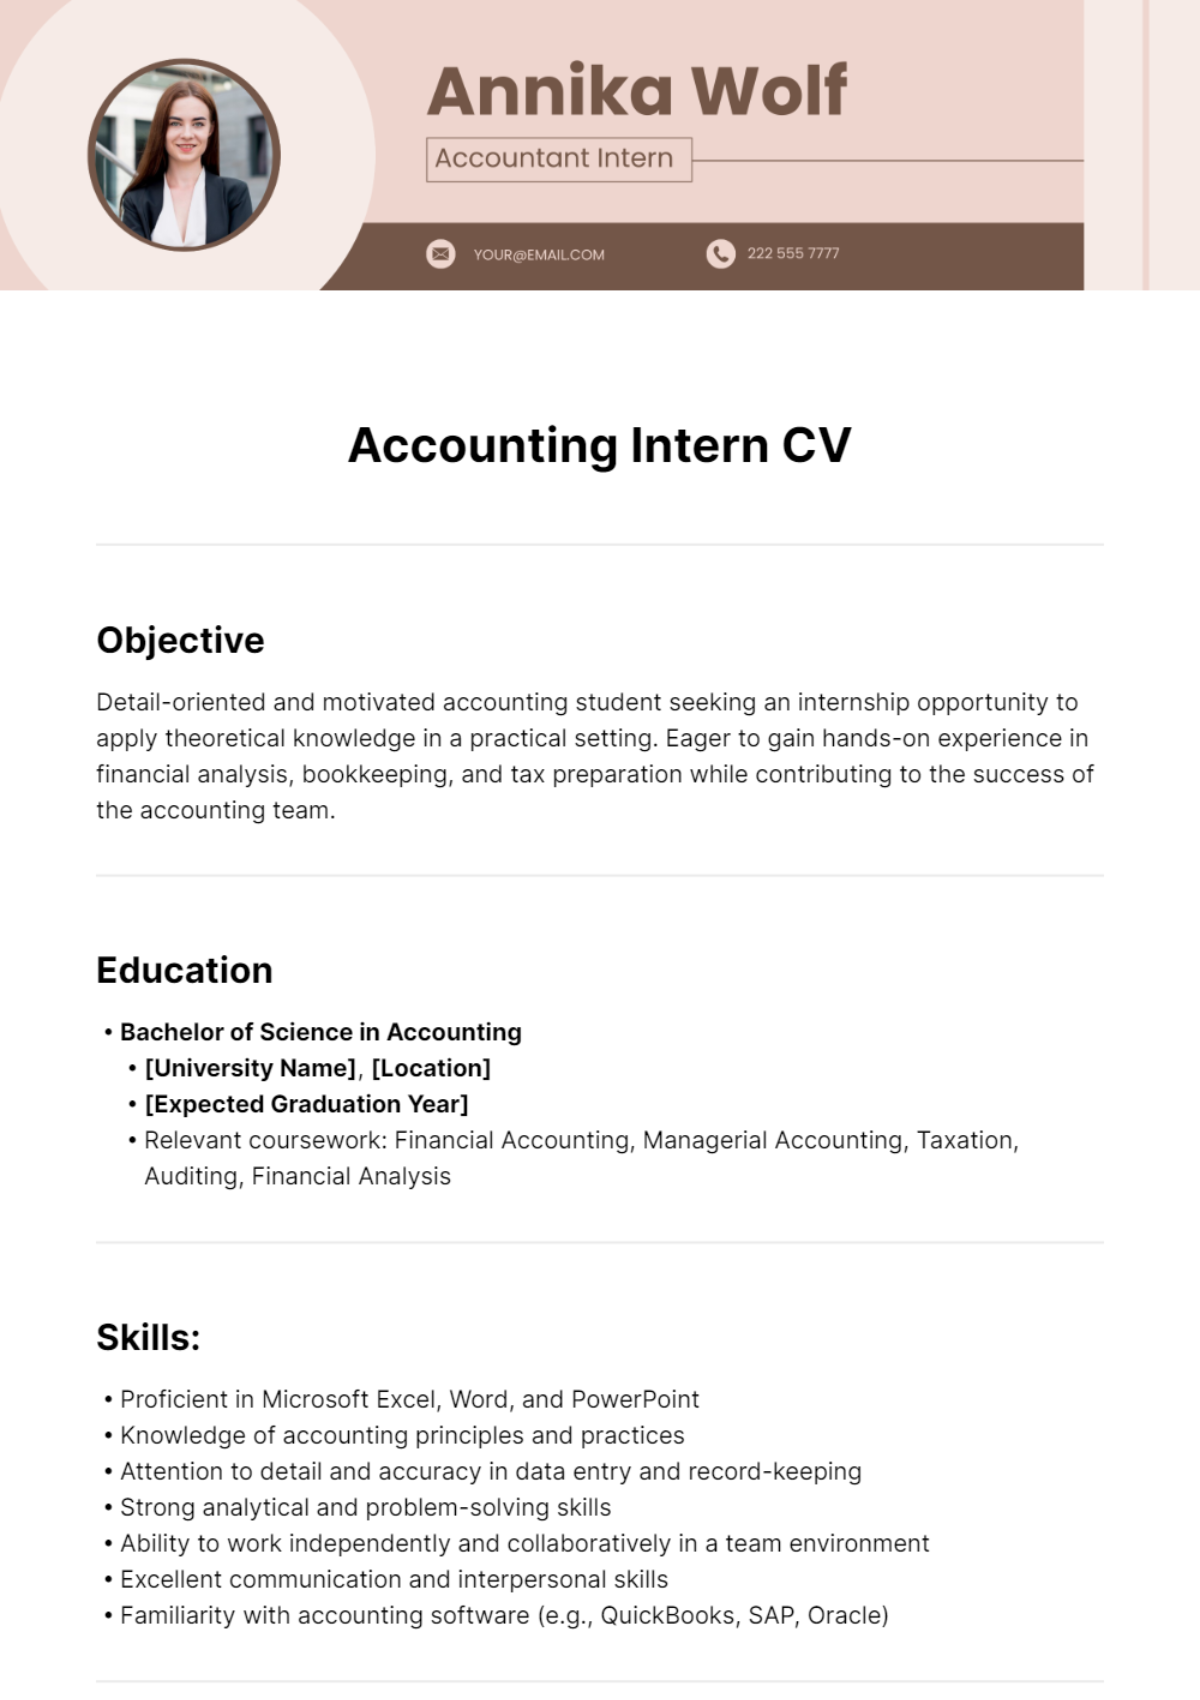 Accounting Intern CV Template